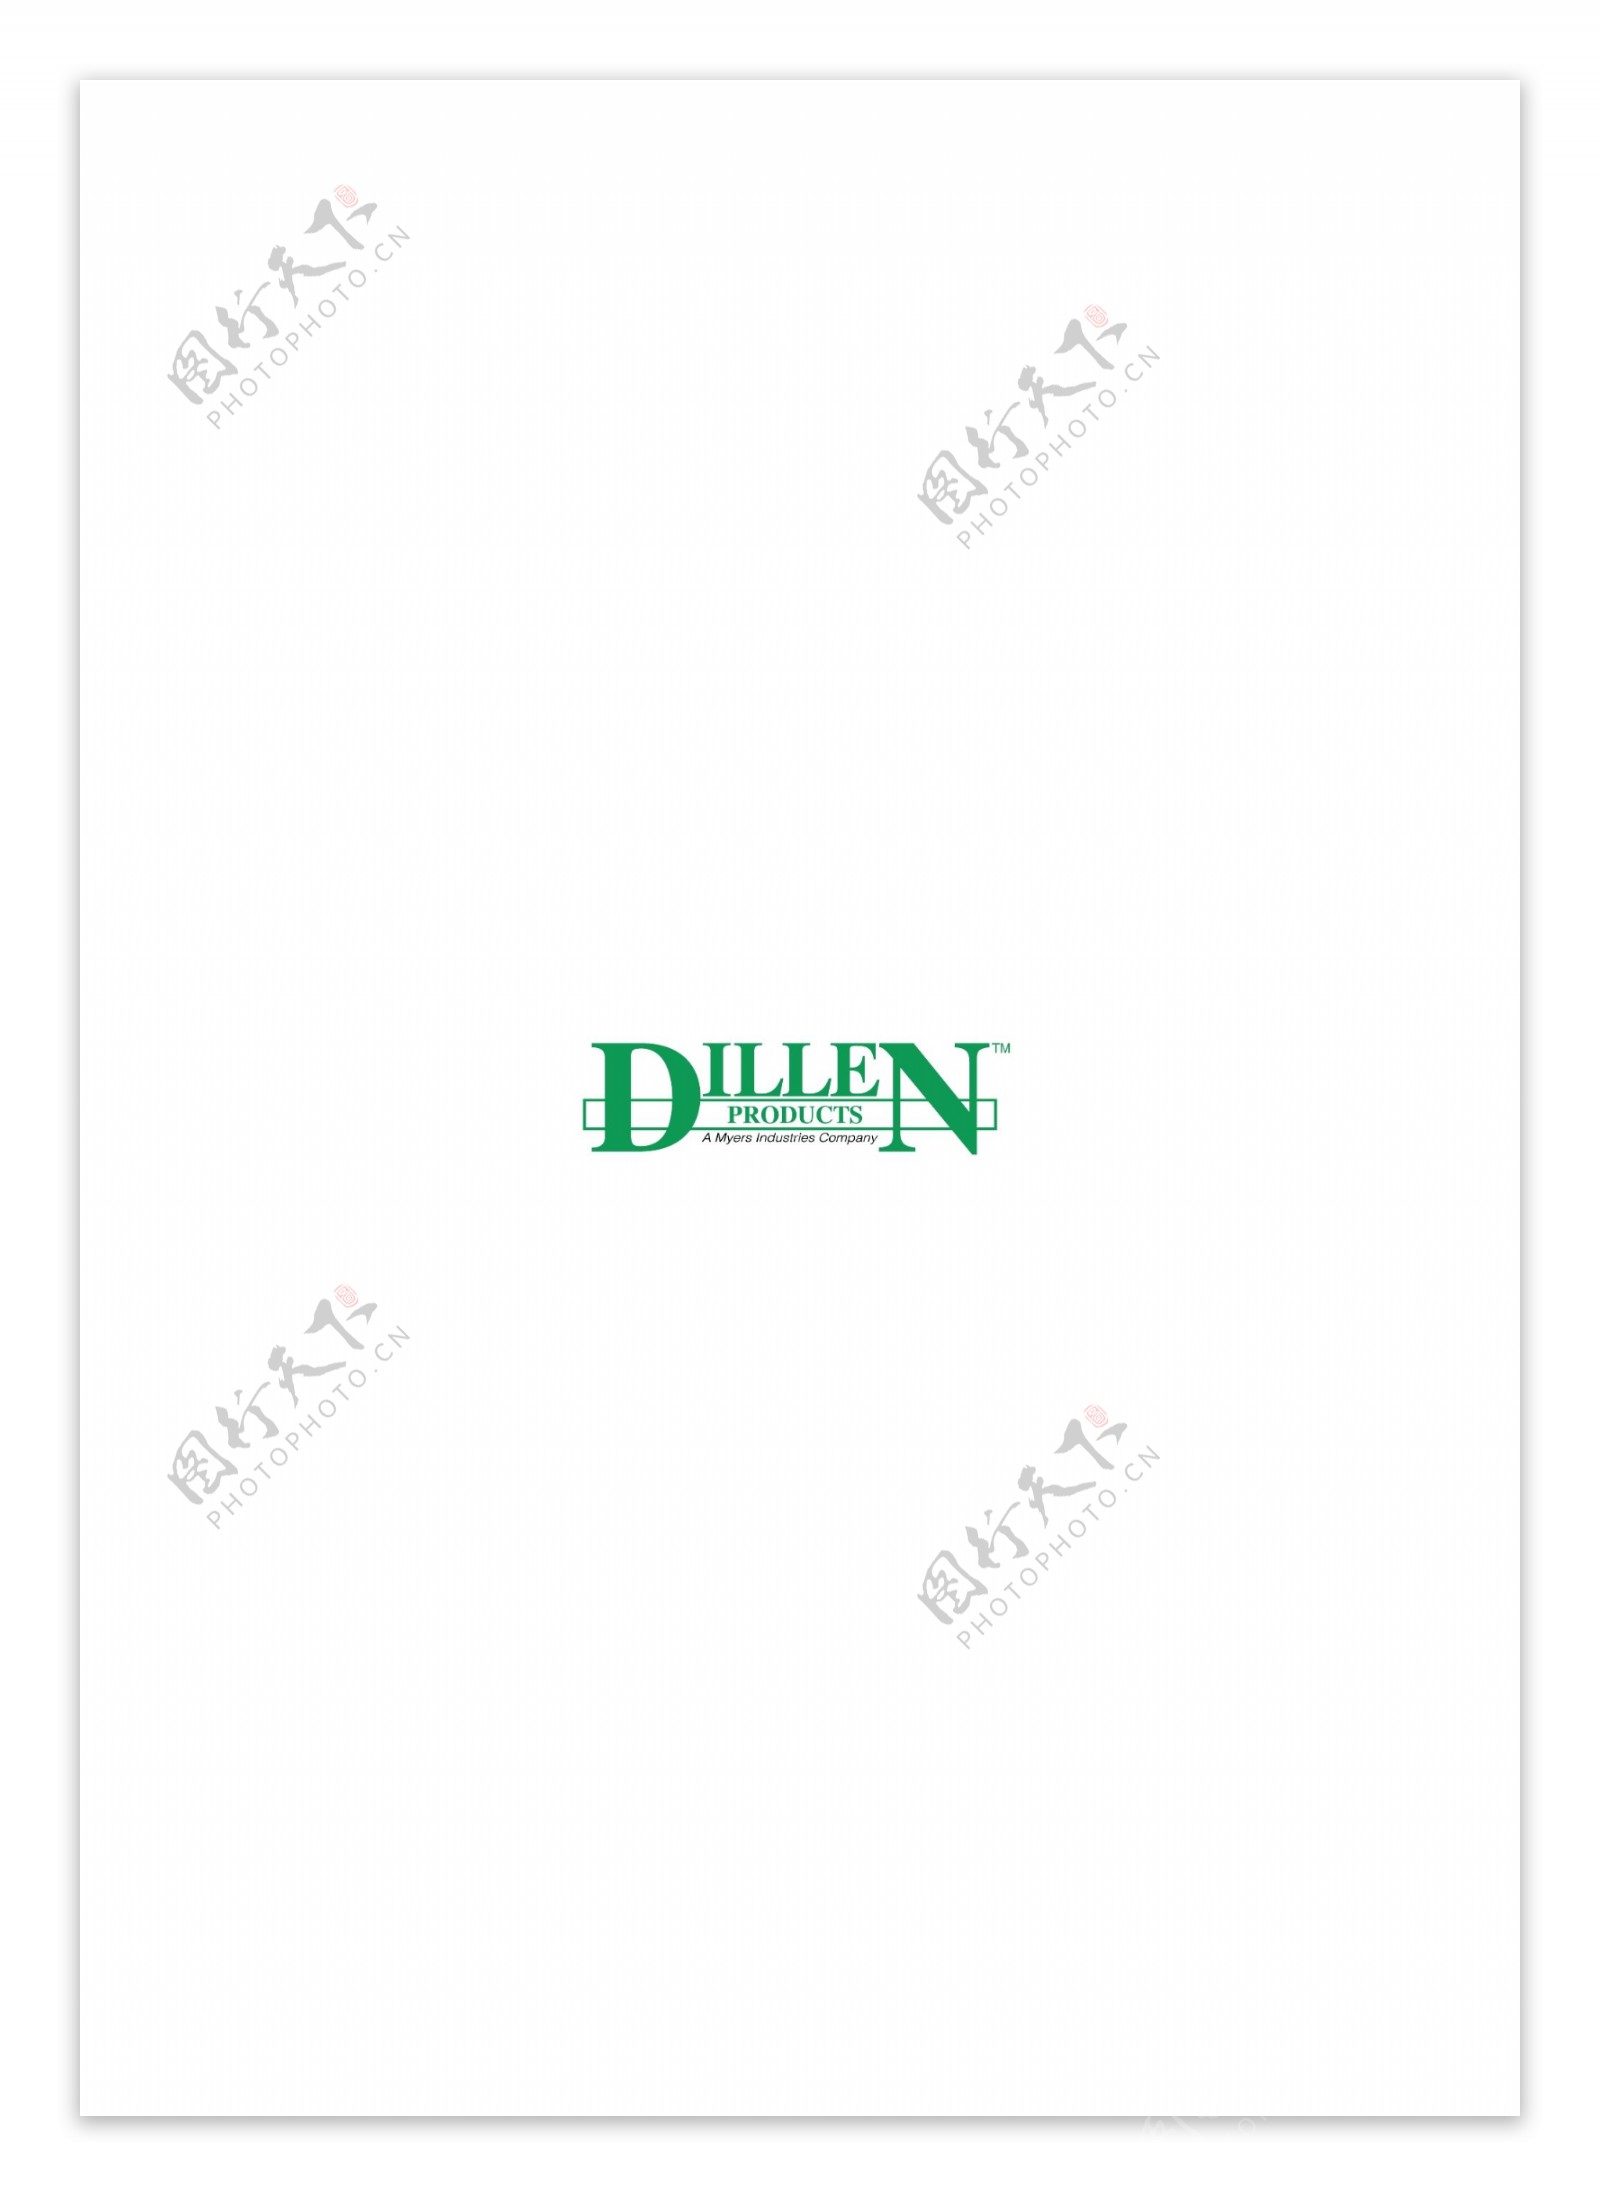 DillenProductslogo设计欣赏DillenProducts工厂LOGO下载标志设计欣赏